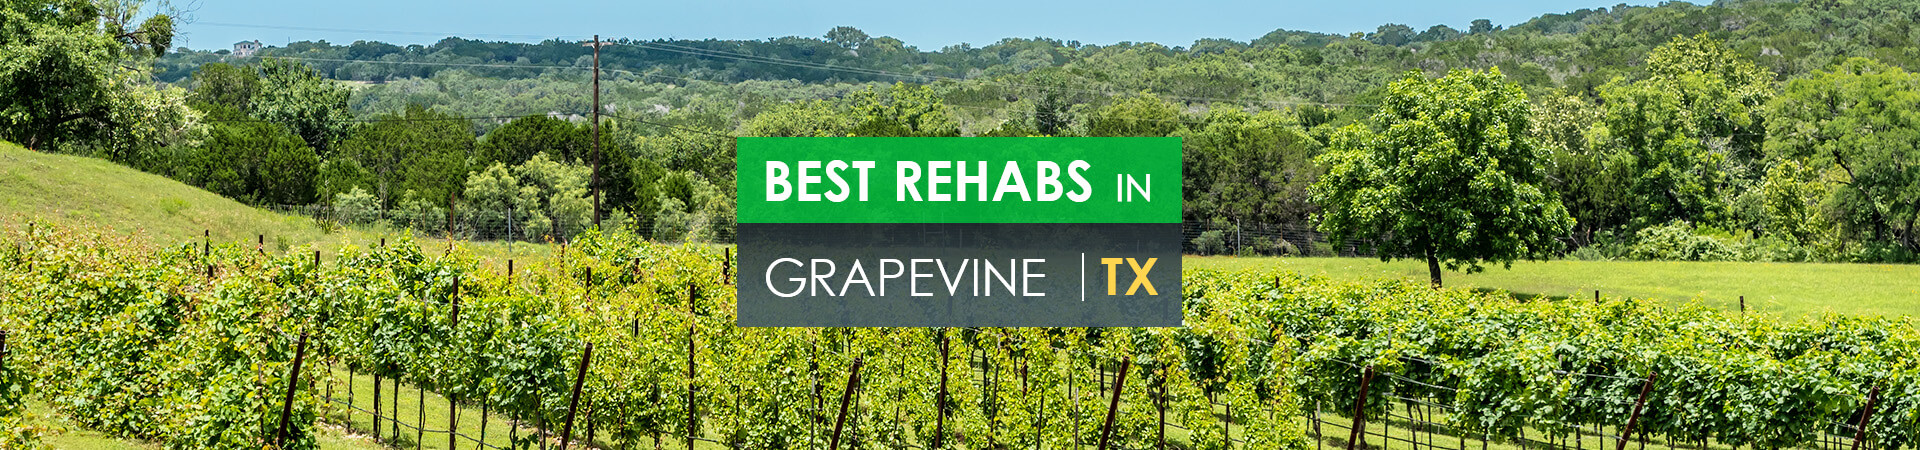 Best rehabs in Grapevine, TX